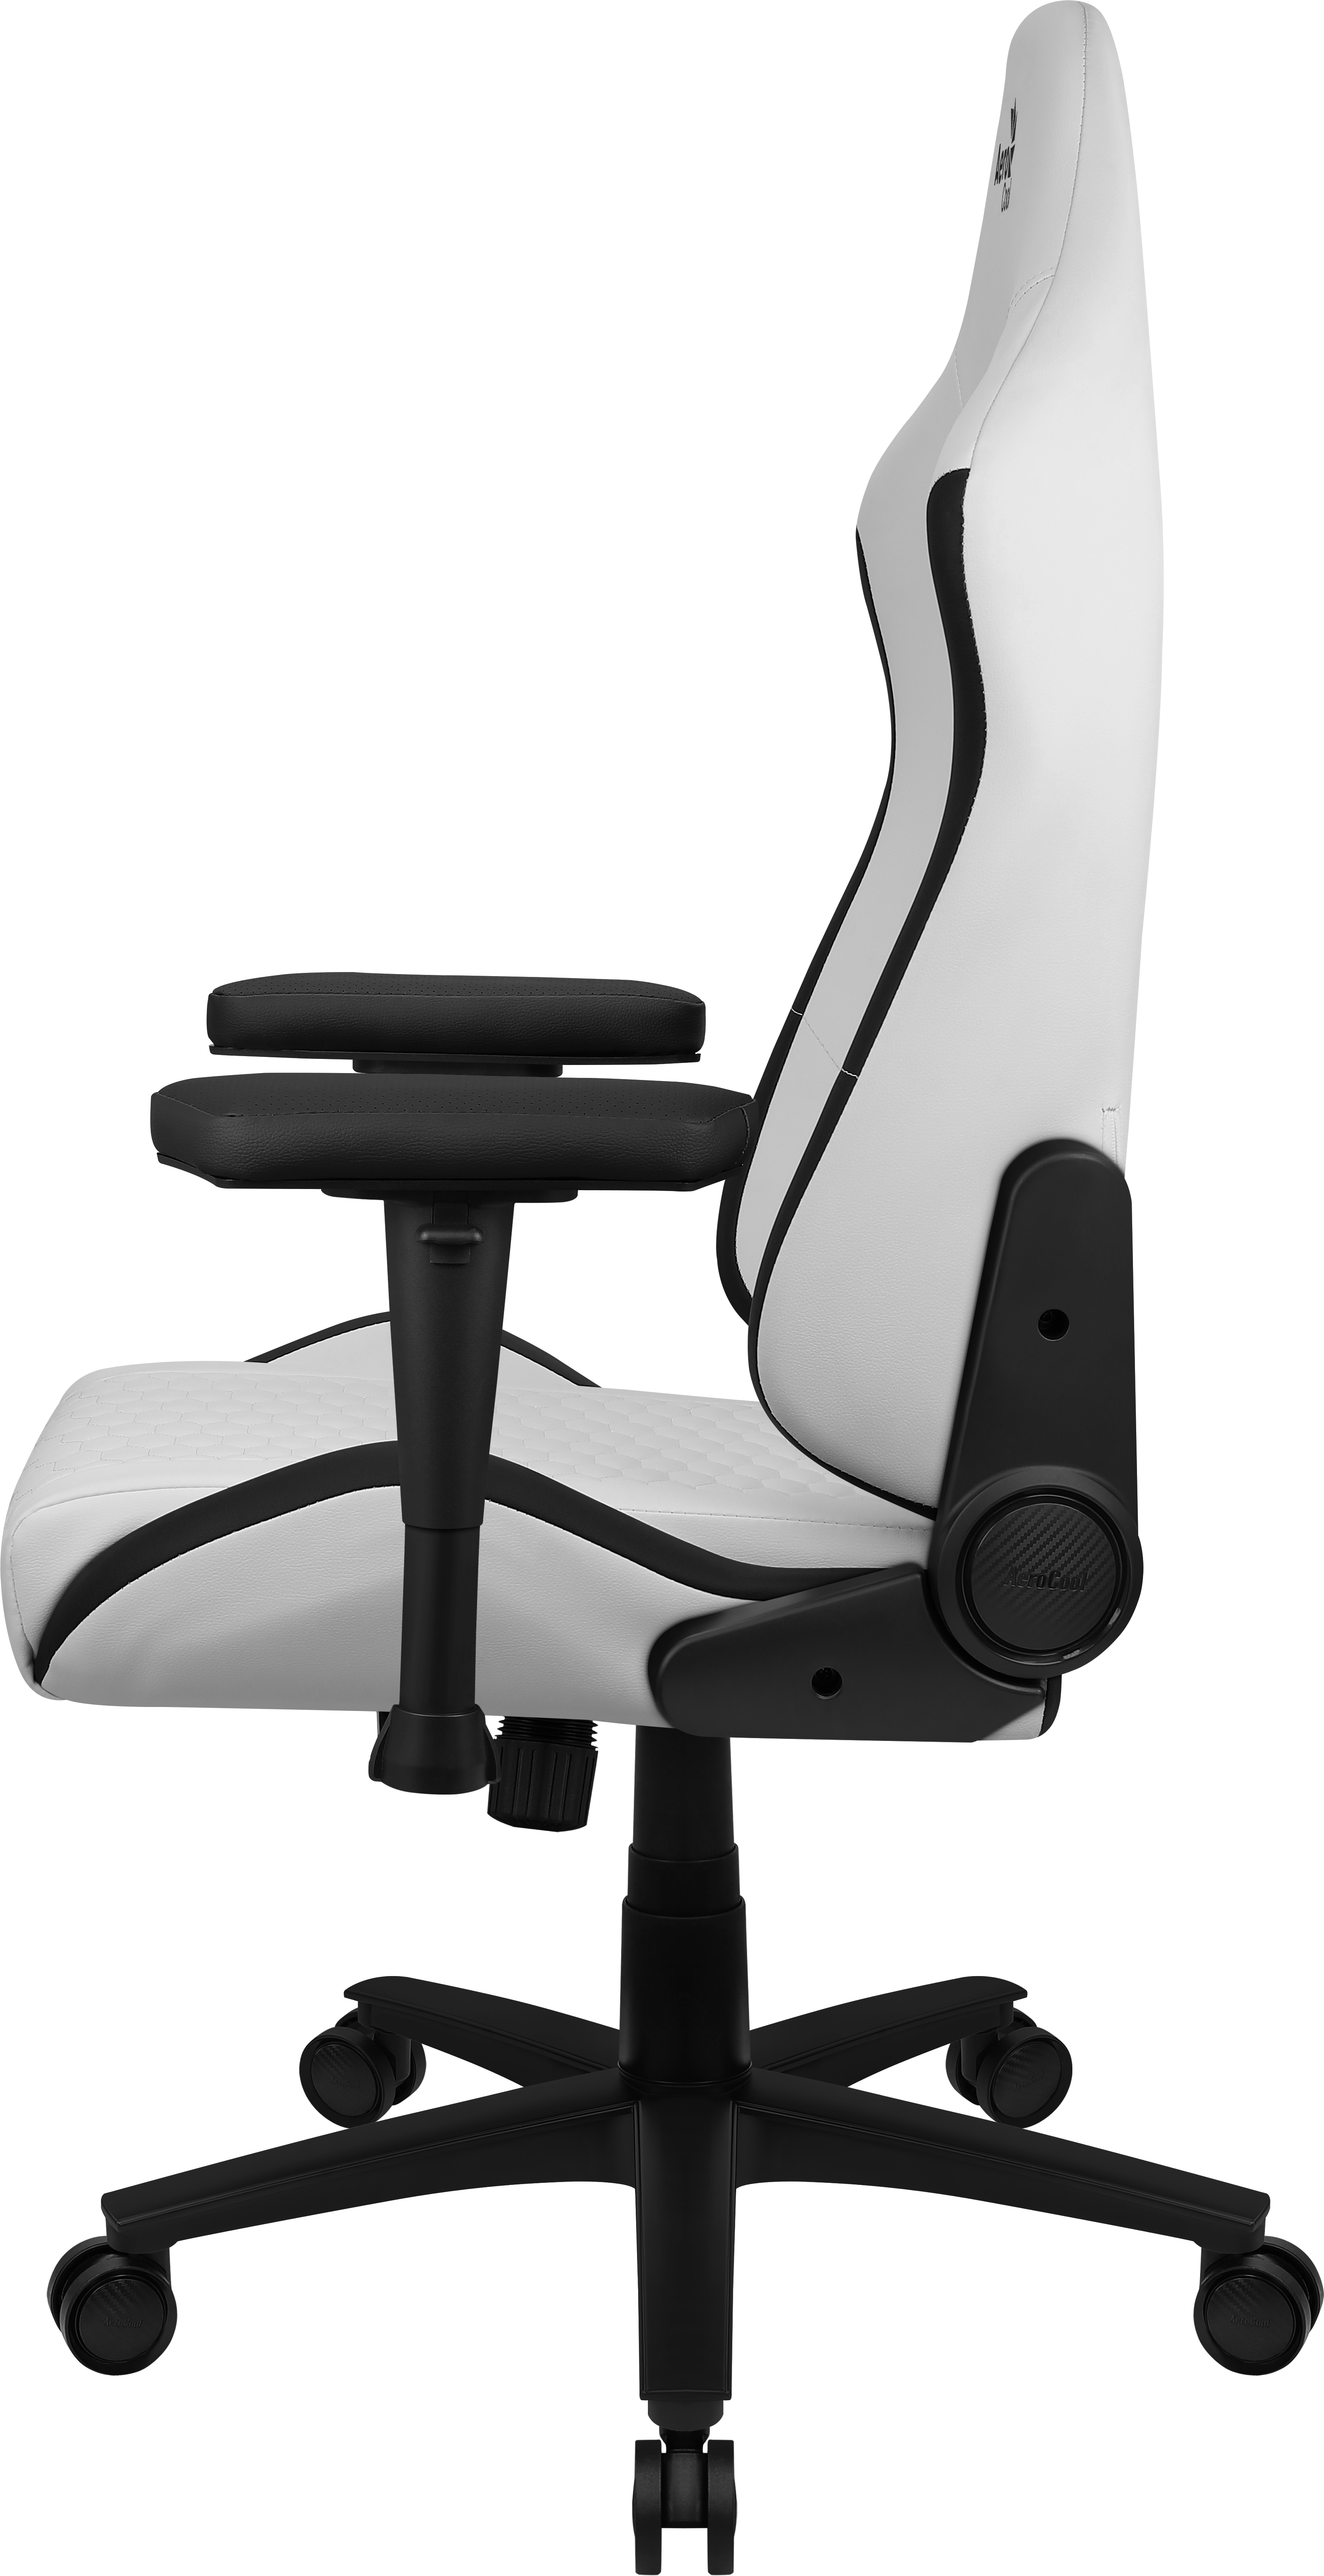 Aerocool - Aerocool Crown Nobility Series Gaming Chair - Moonstone White